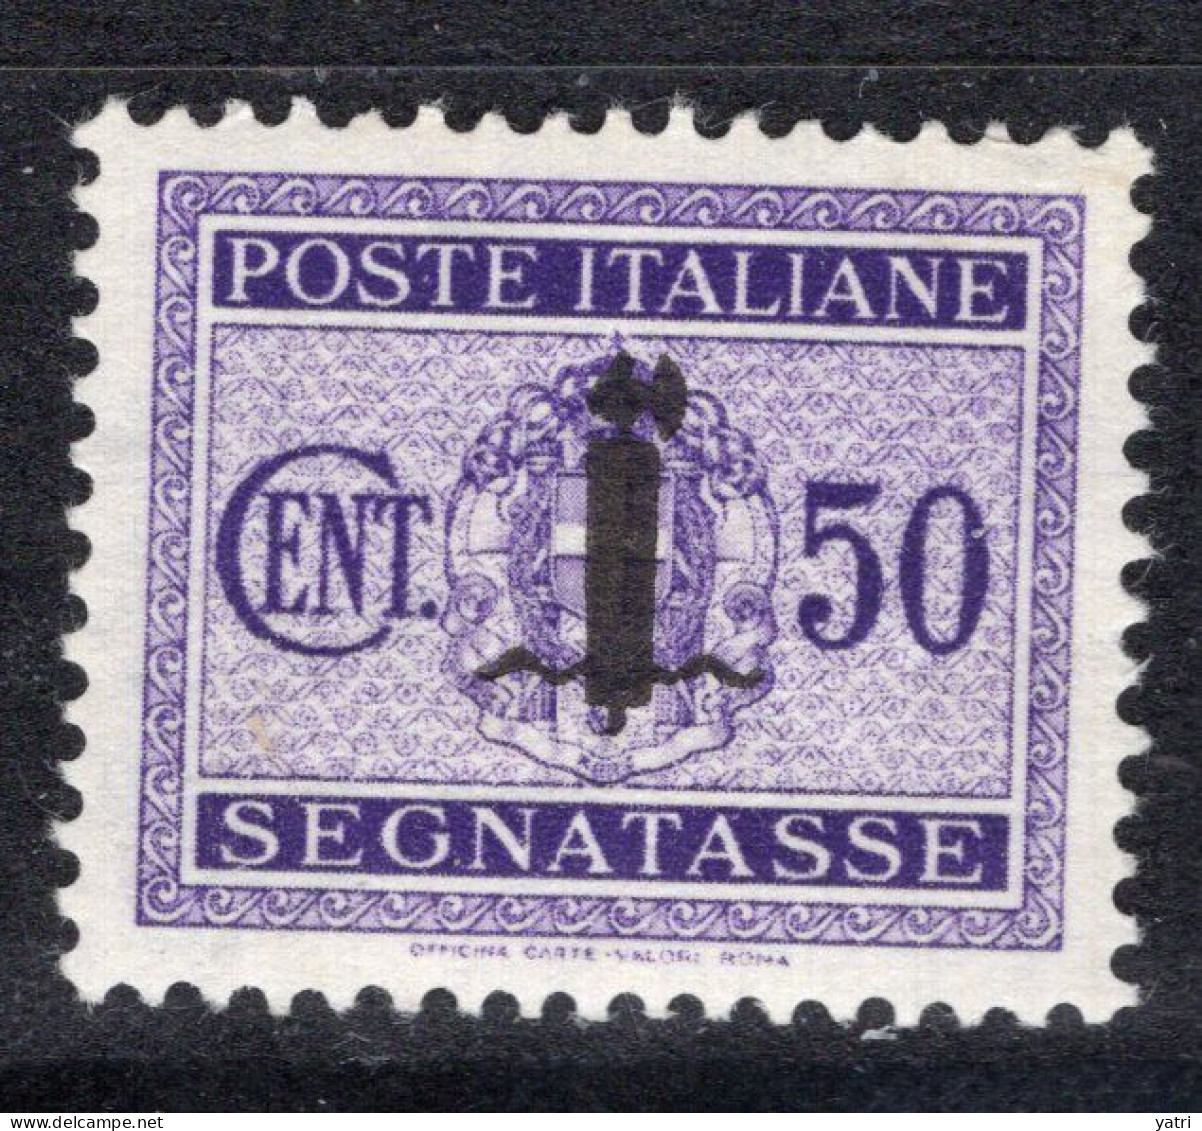 Repubblica Sociale Italiana - Segnatasse 50 Centesimi * MH - Strafport